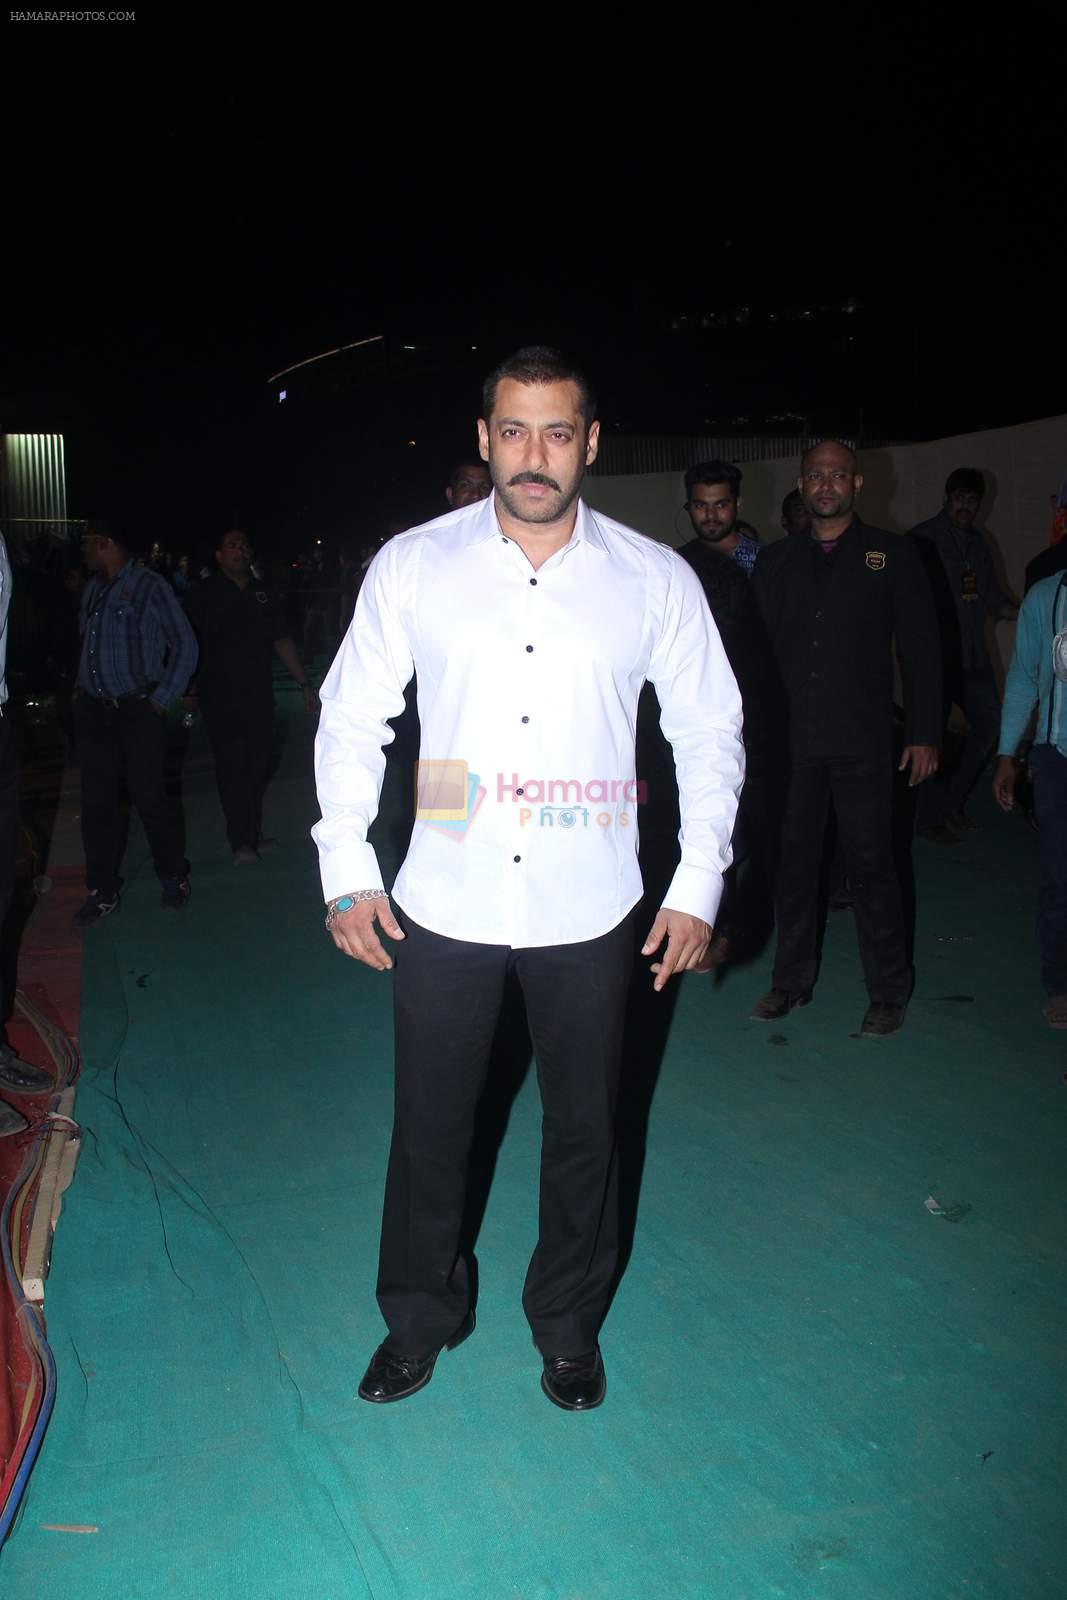 Salman Khan at Big Star Awards in Mumbai on 13th Dec 2015